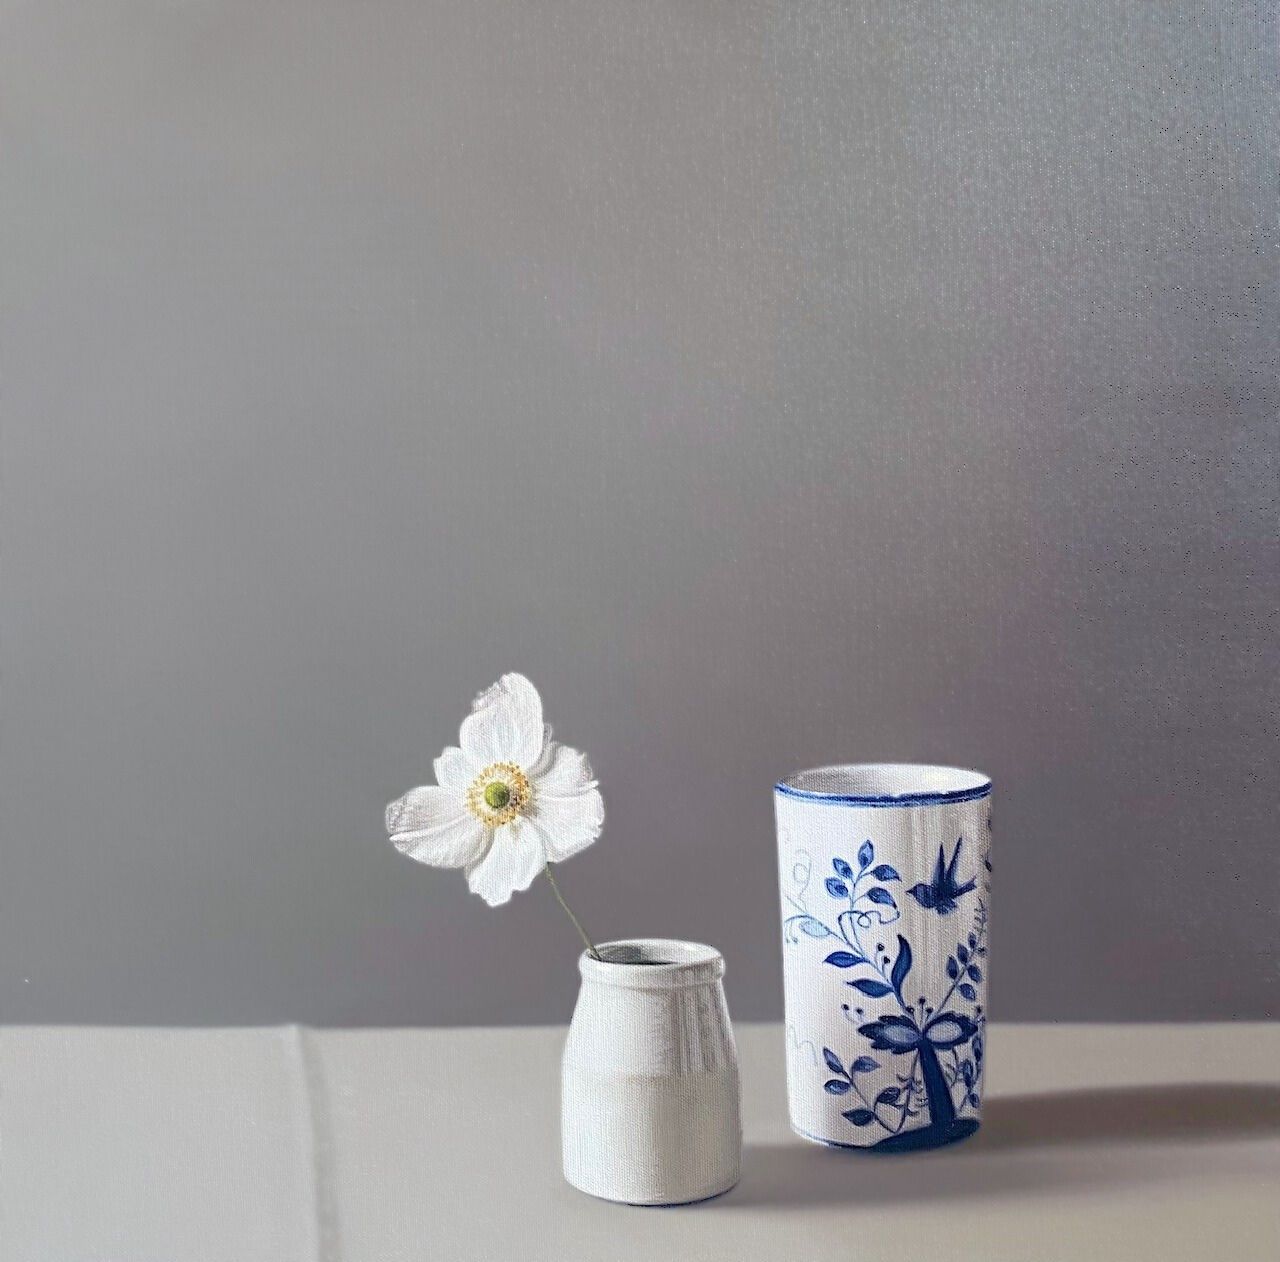 Jo Barrett - Japanese Anemone with Blue and White Vase